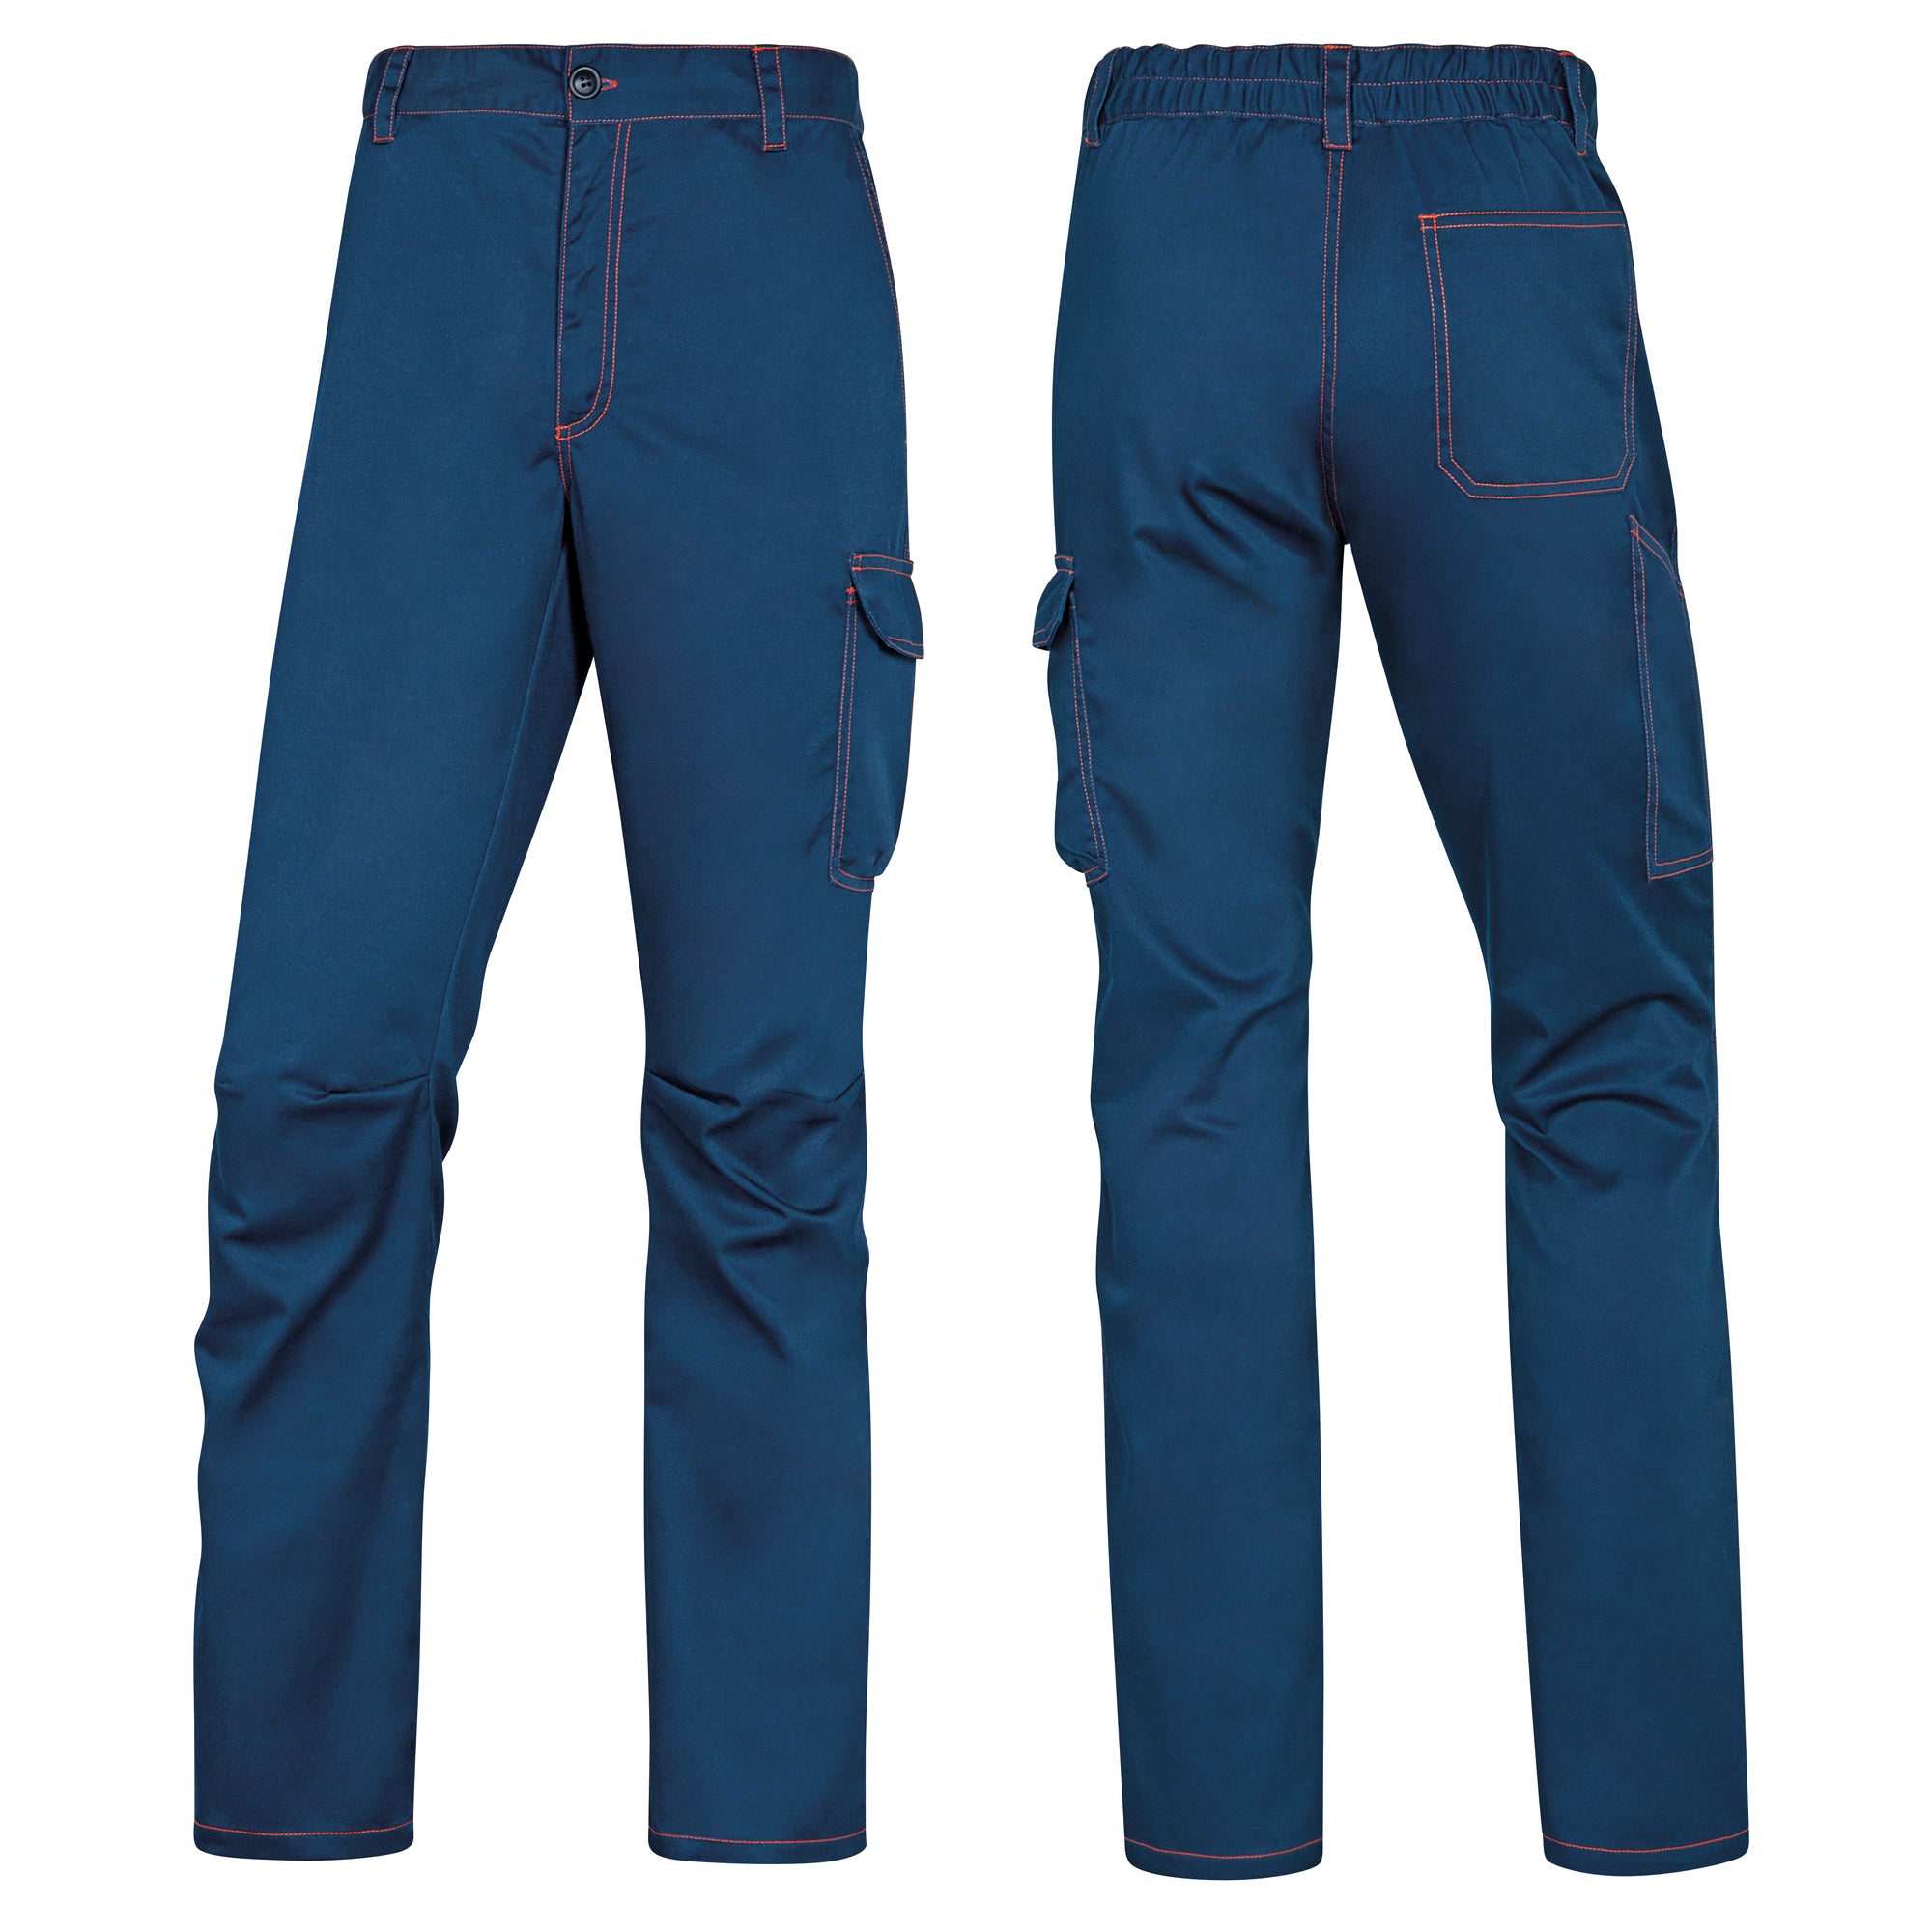 deltaplus-pantalone-lavoro-panostrpa-tg-xl-blu-arancio